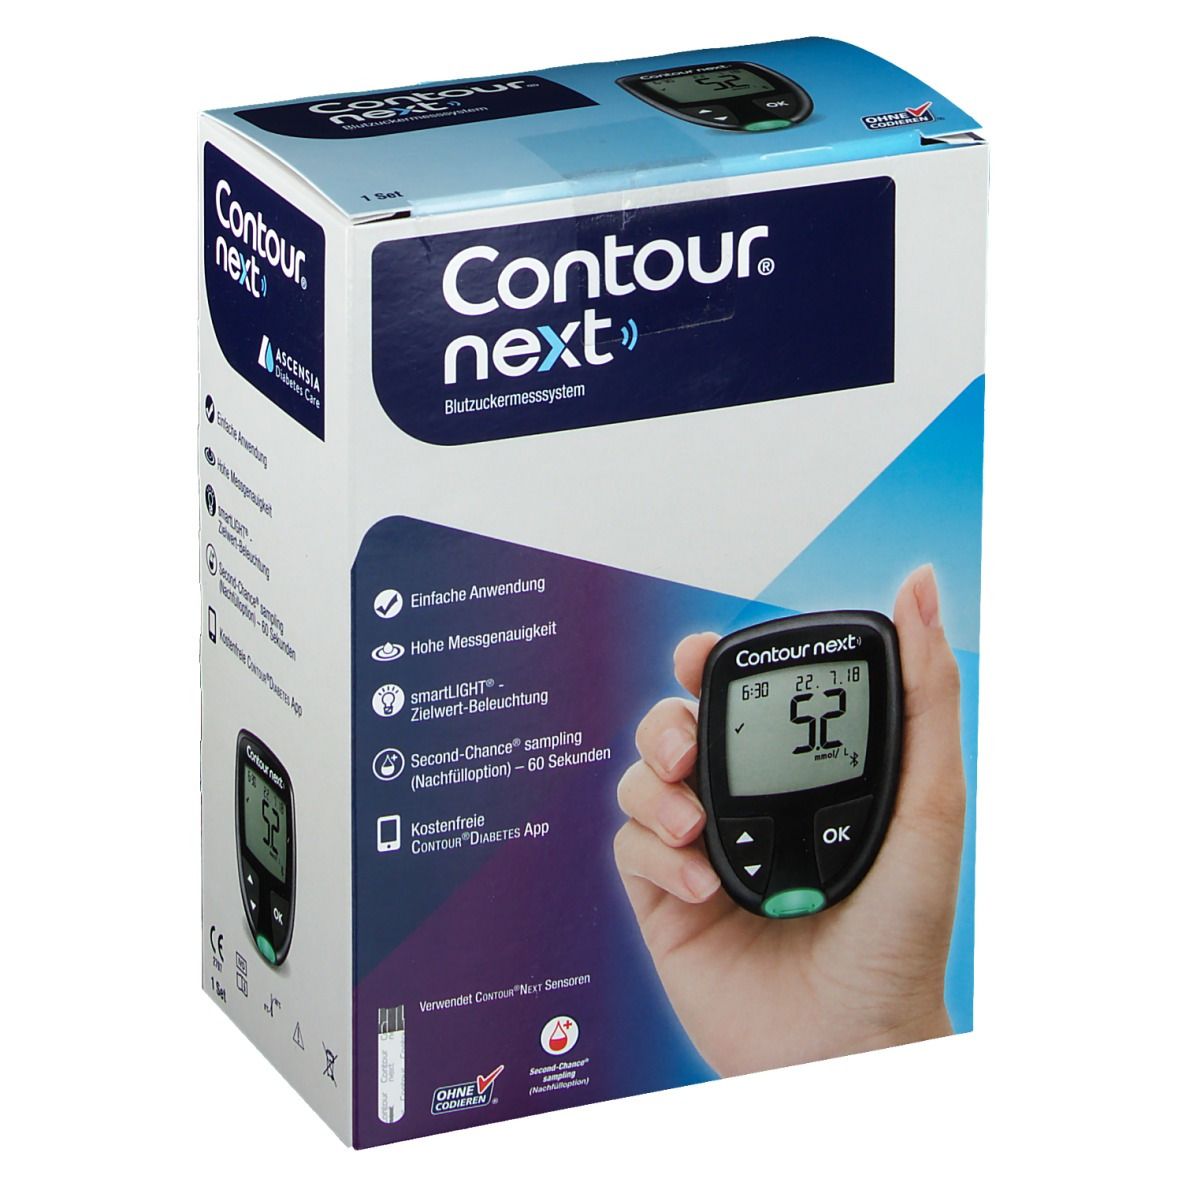 Contour next blood sugar measuring device MMOL/L